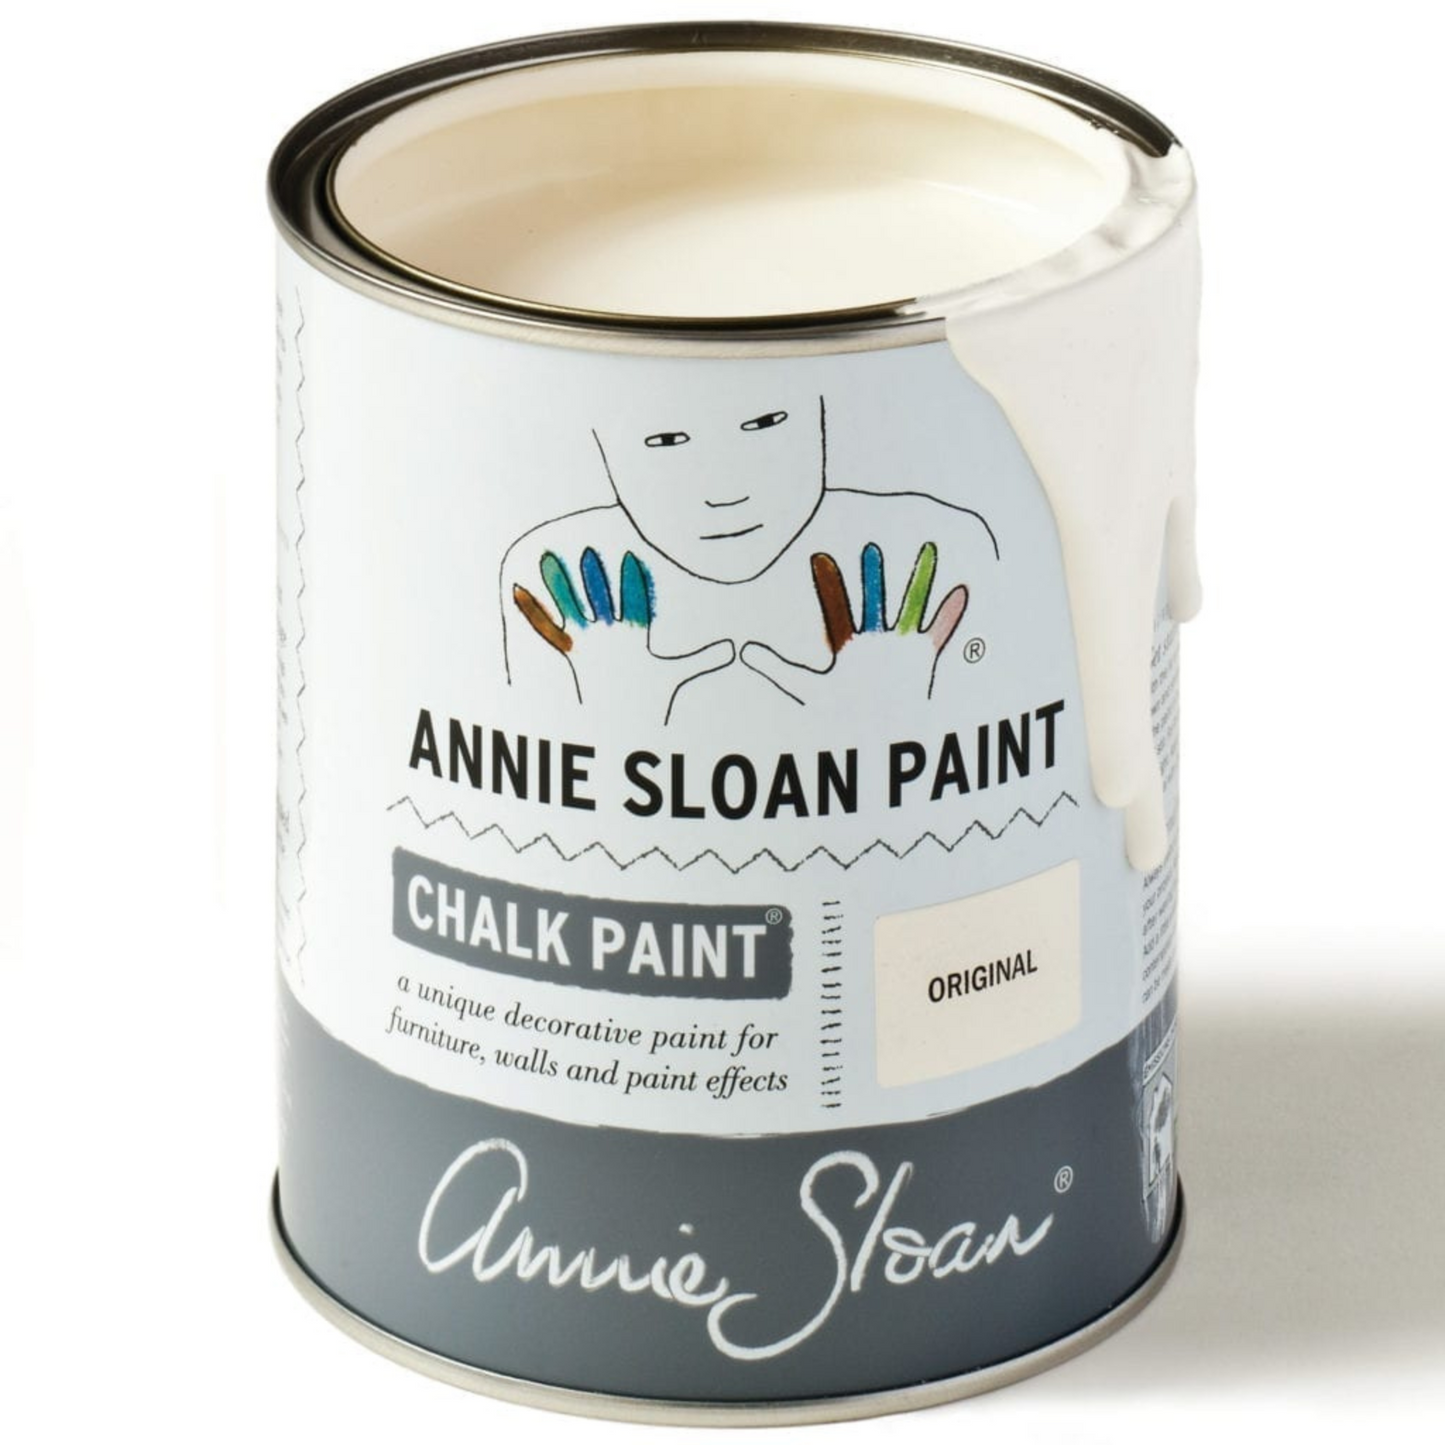 Can of Original Annie Sloan Chalk Paint.